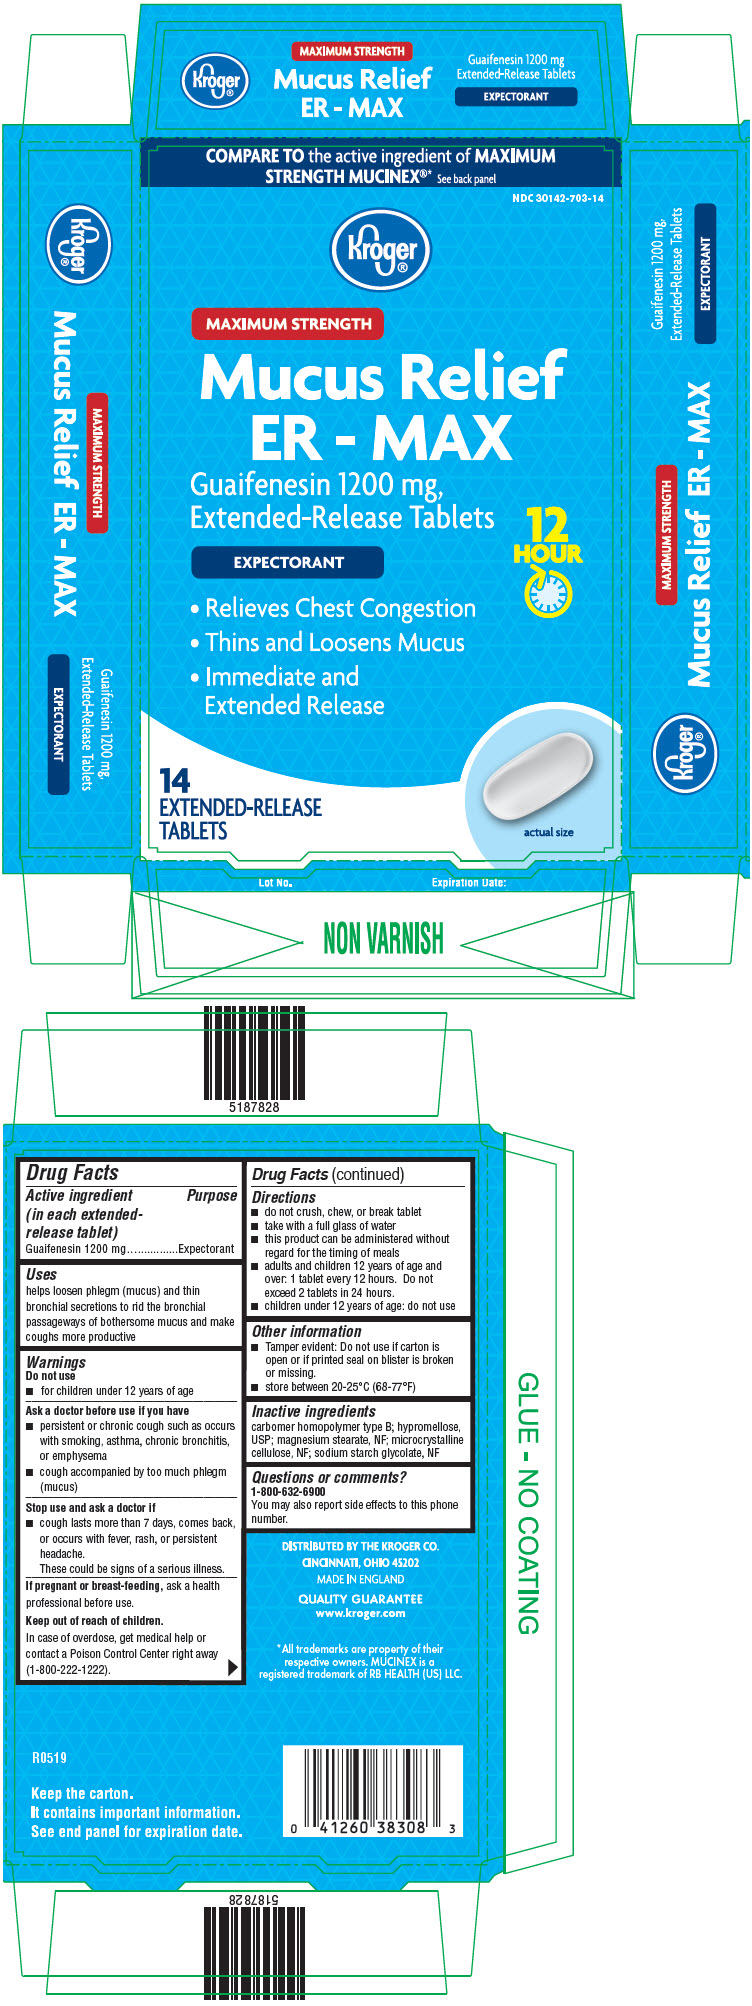 PRINCIPAL DISPLAY PANEL - 1200 mg Tablet Blister Pack Carton